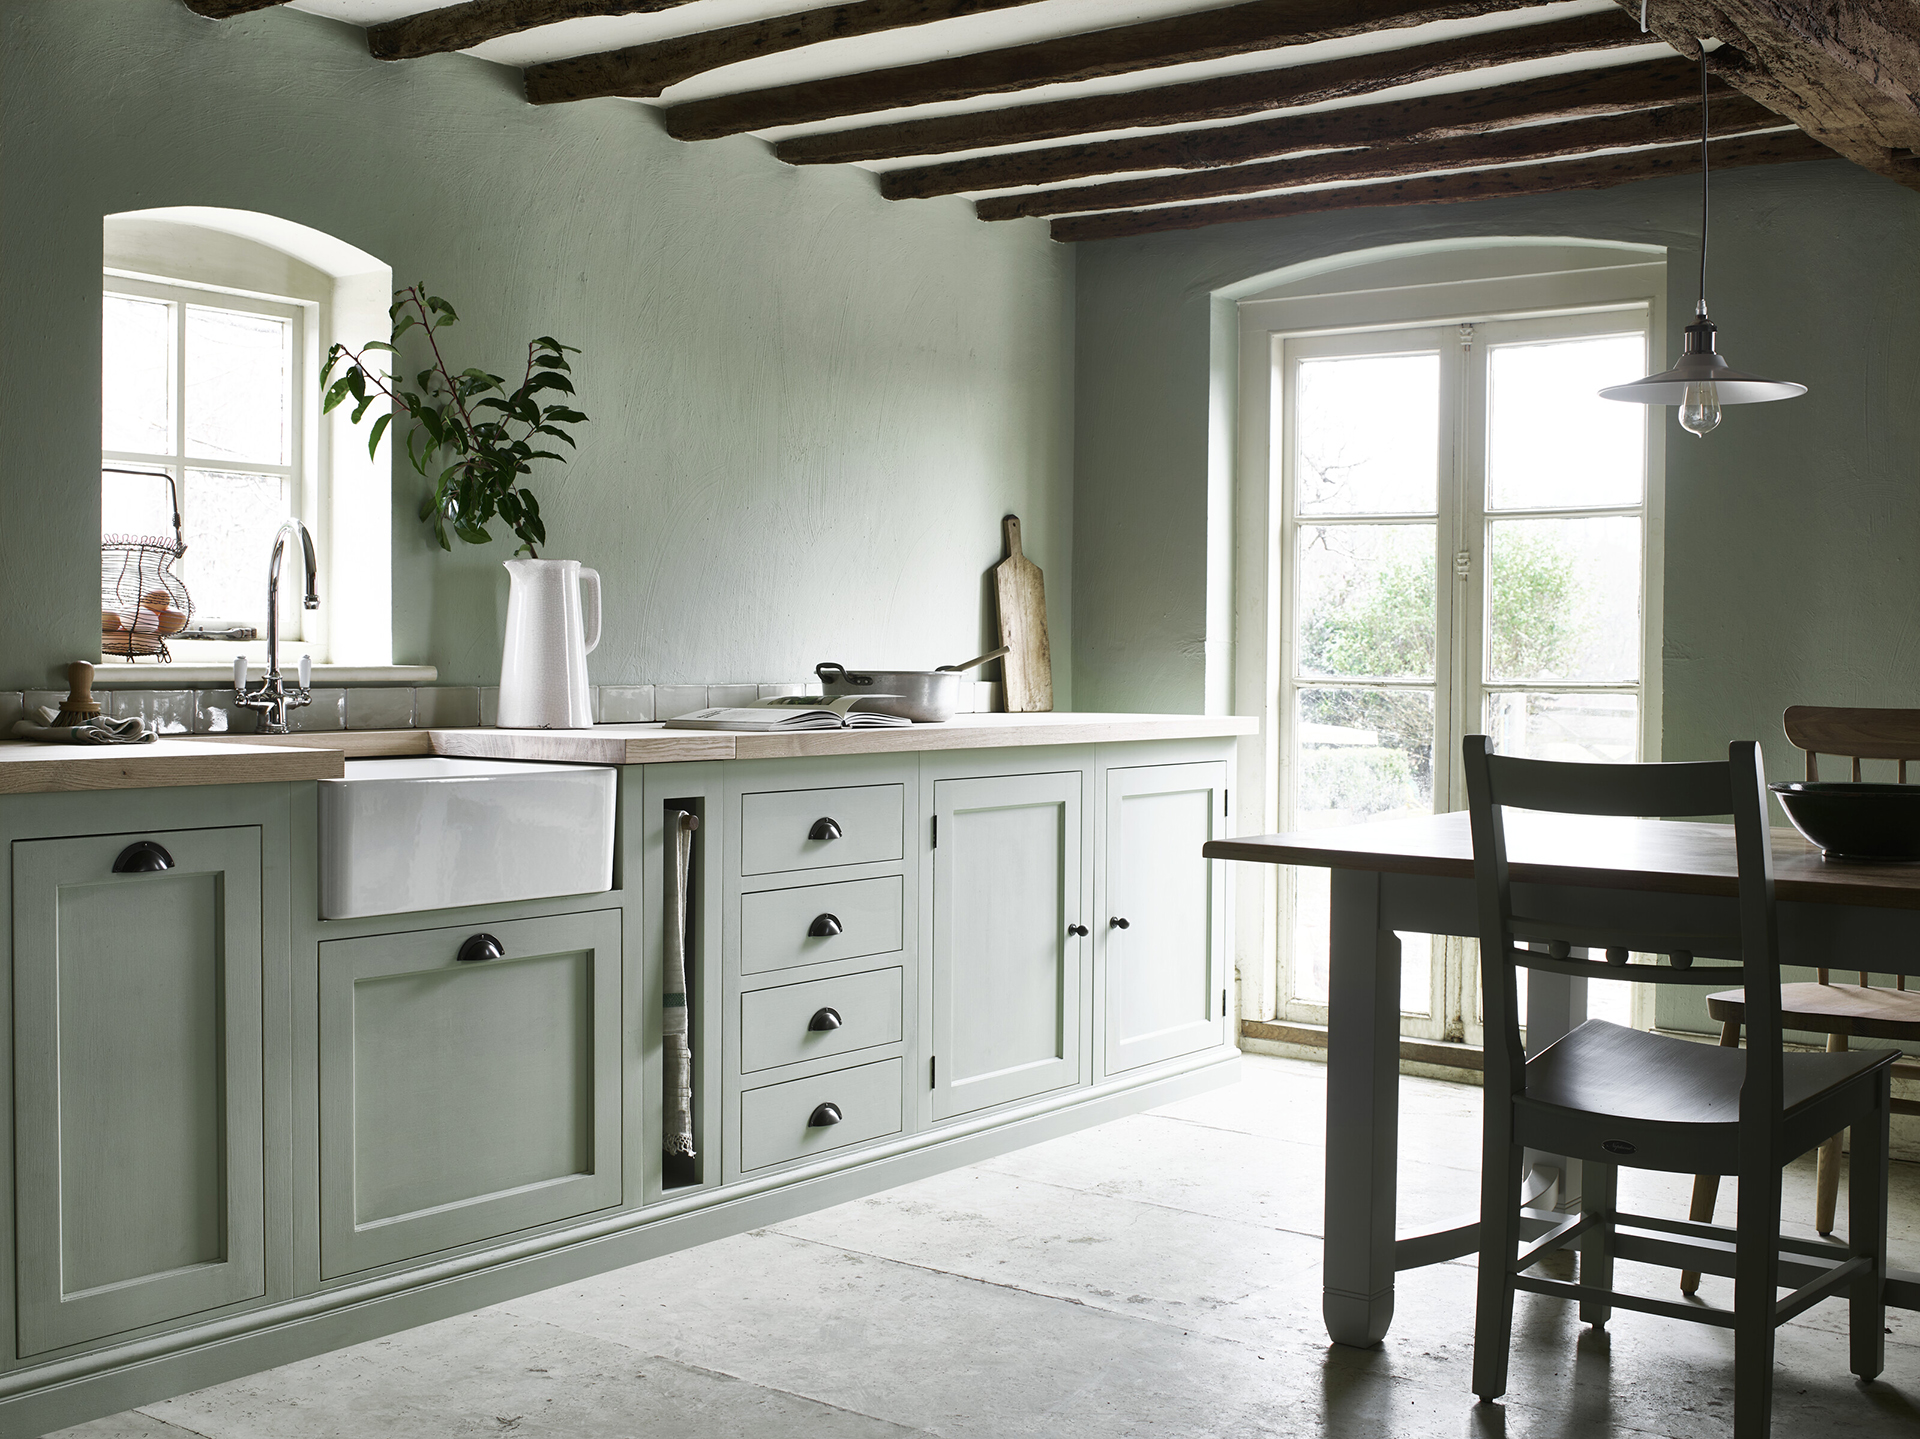 cottage kitchen in olive green